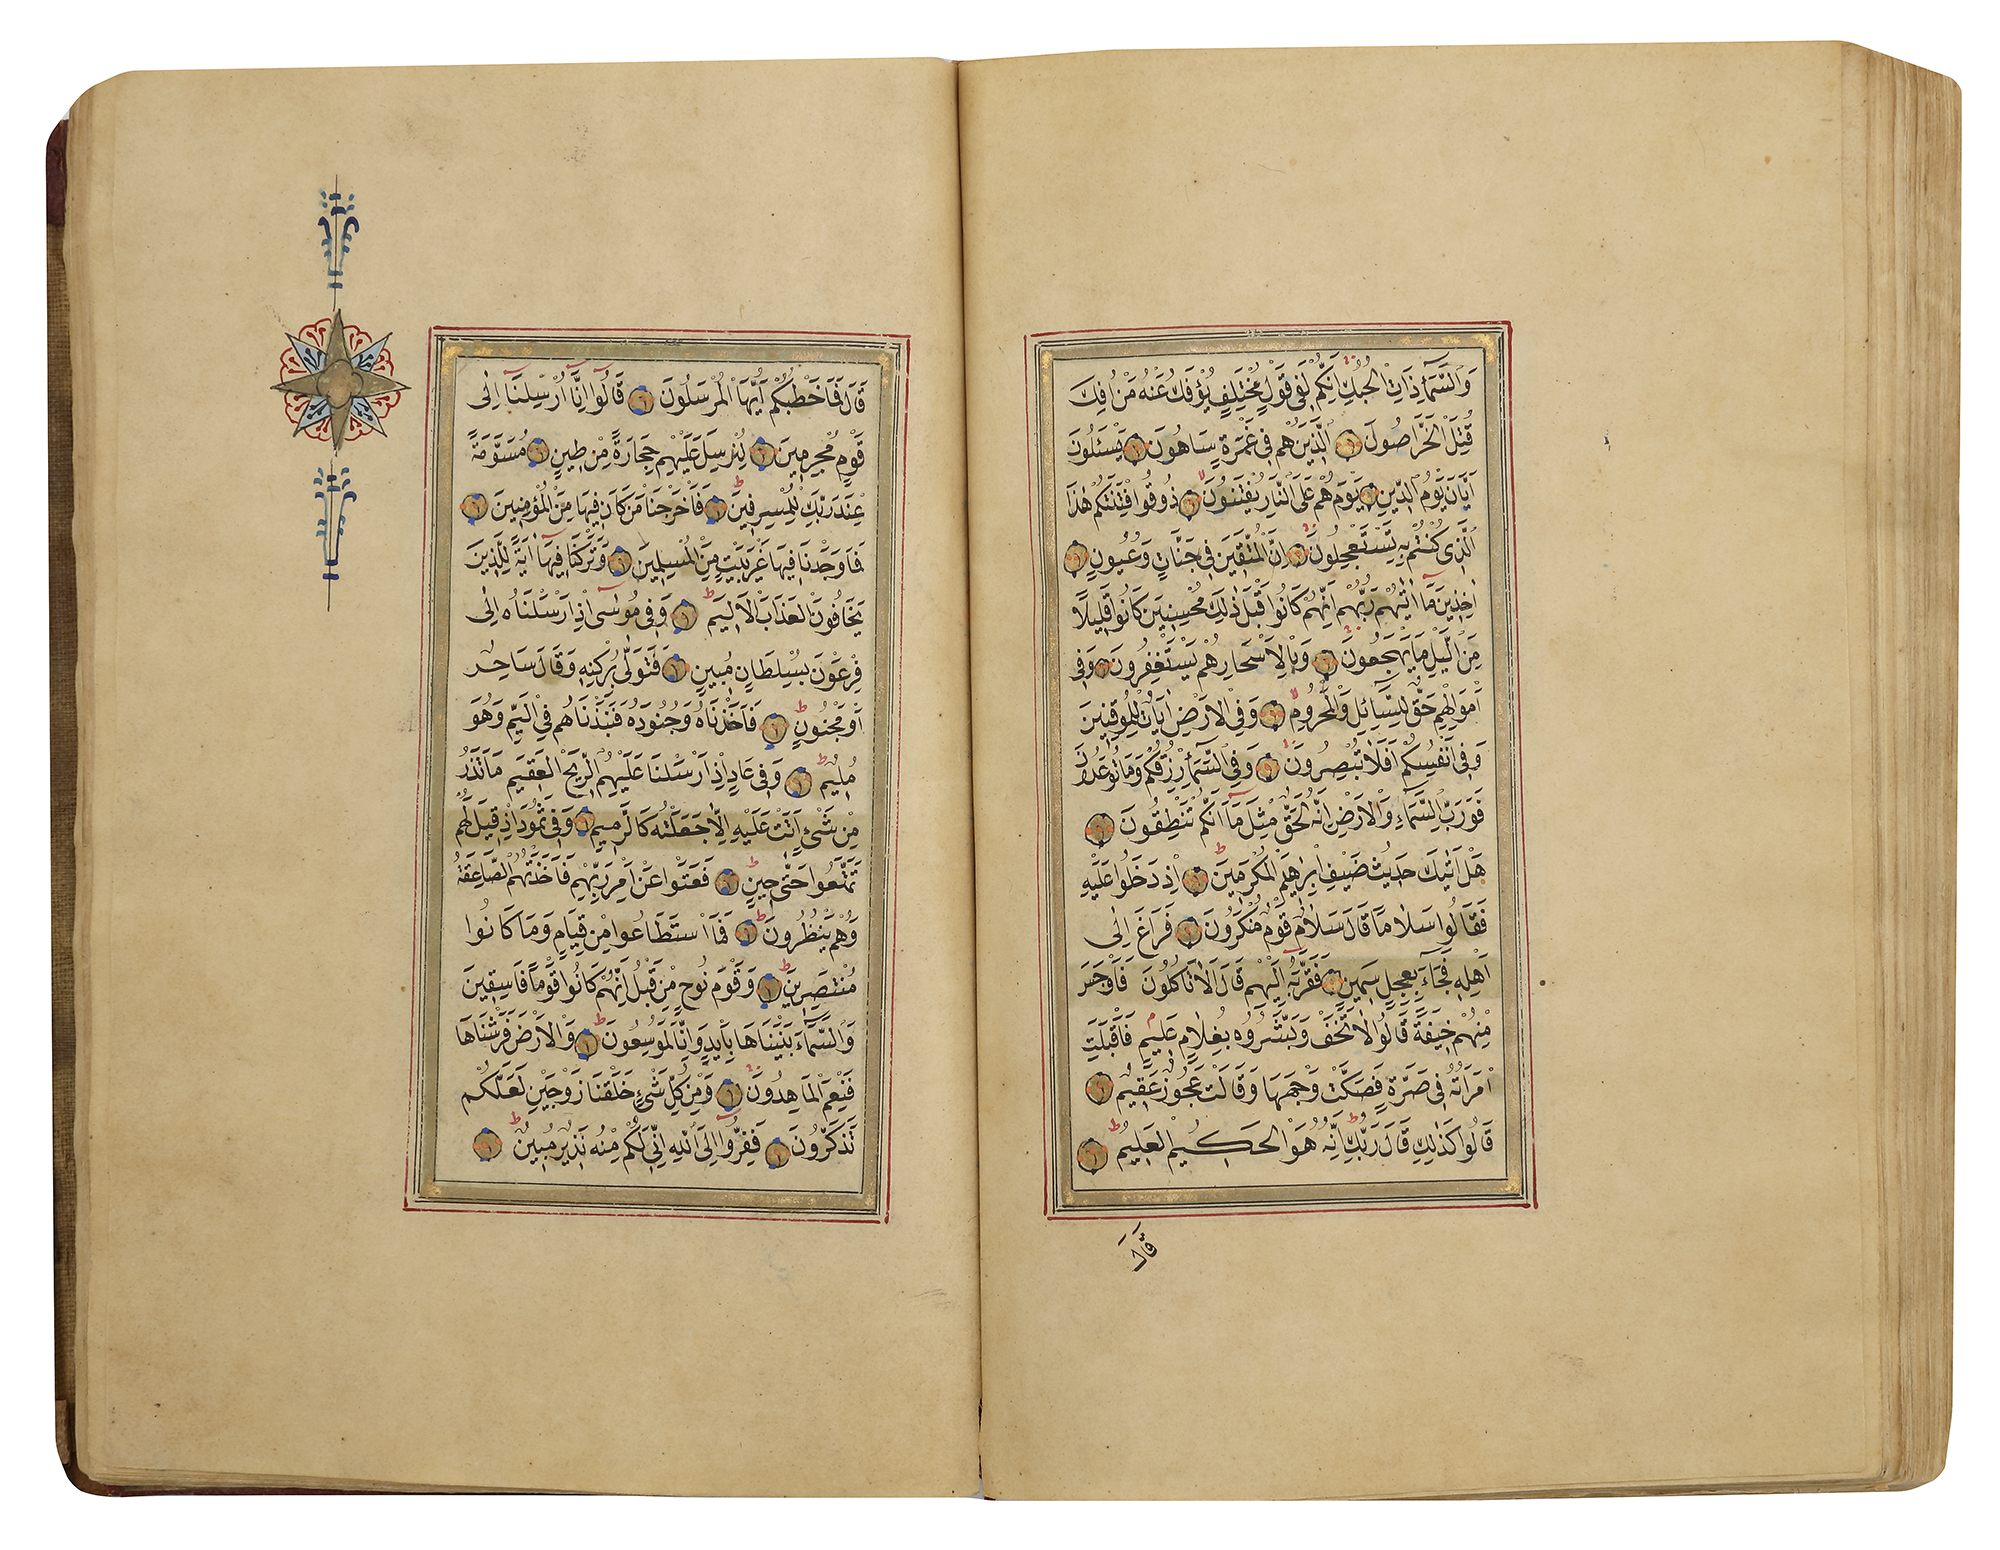 A FINE OTTOMAN QURAN, TURKEY, WRITTEN BY OMAR AL-FAWRABI STUDENT OF OMAR RUSHDI, DATED 1273 AH/1856 - Image 7 of 20